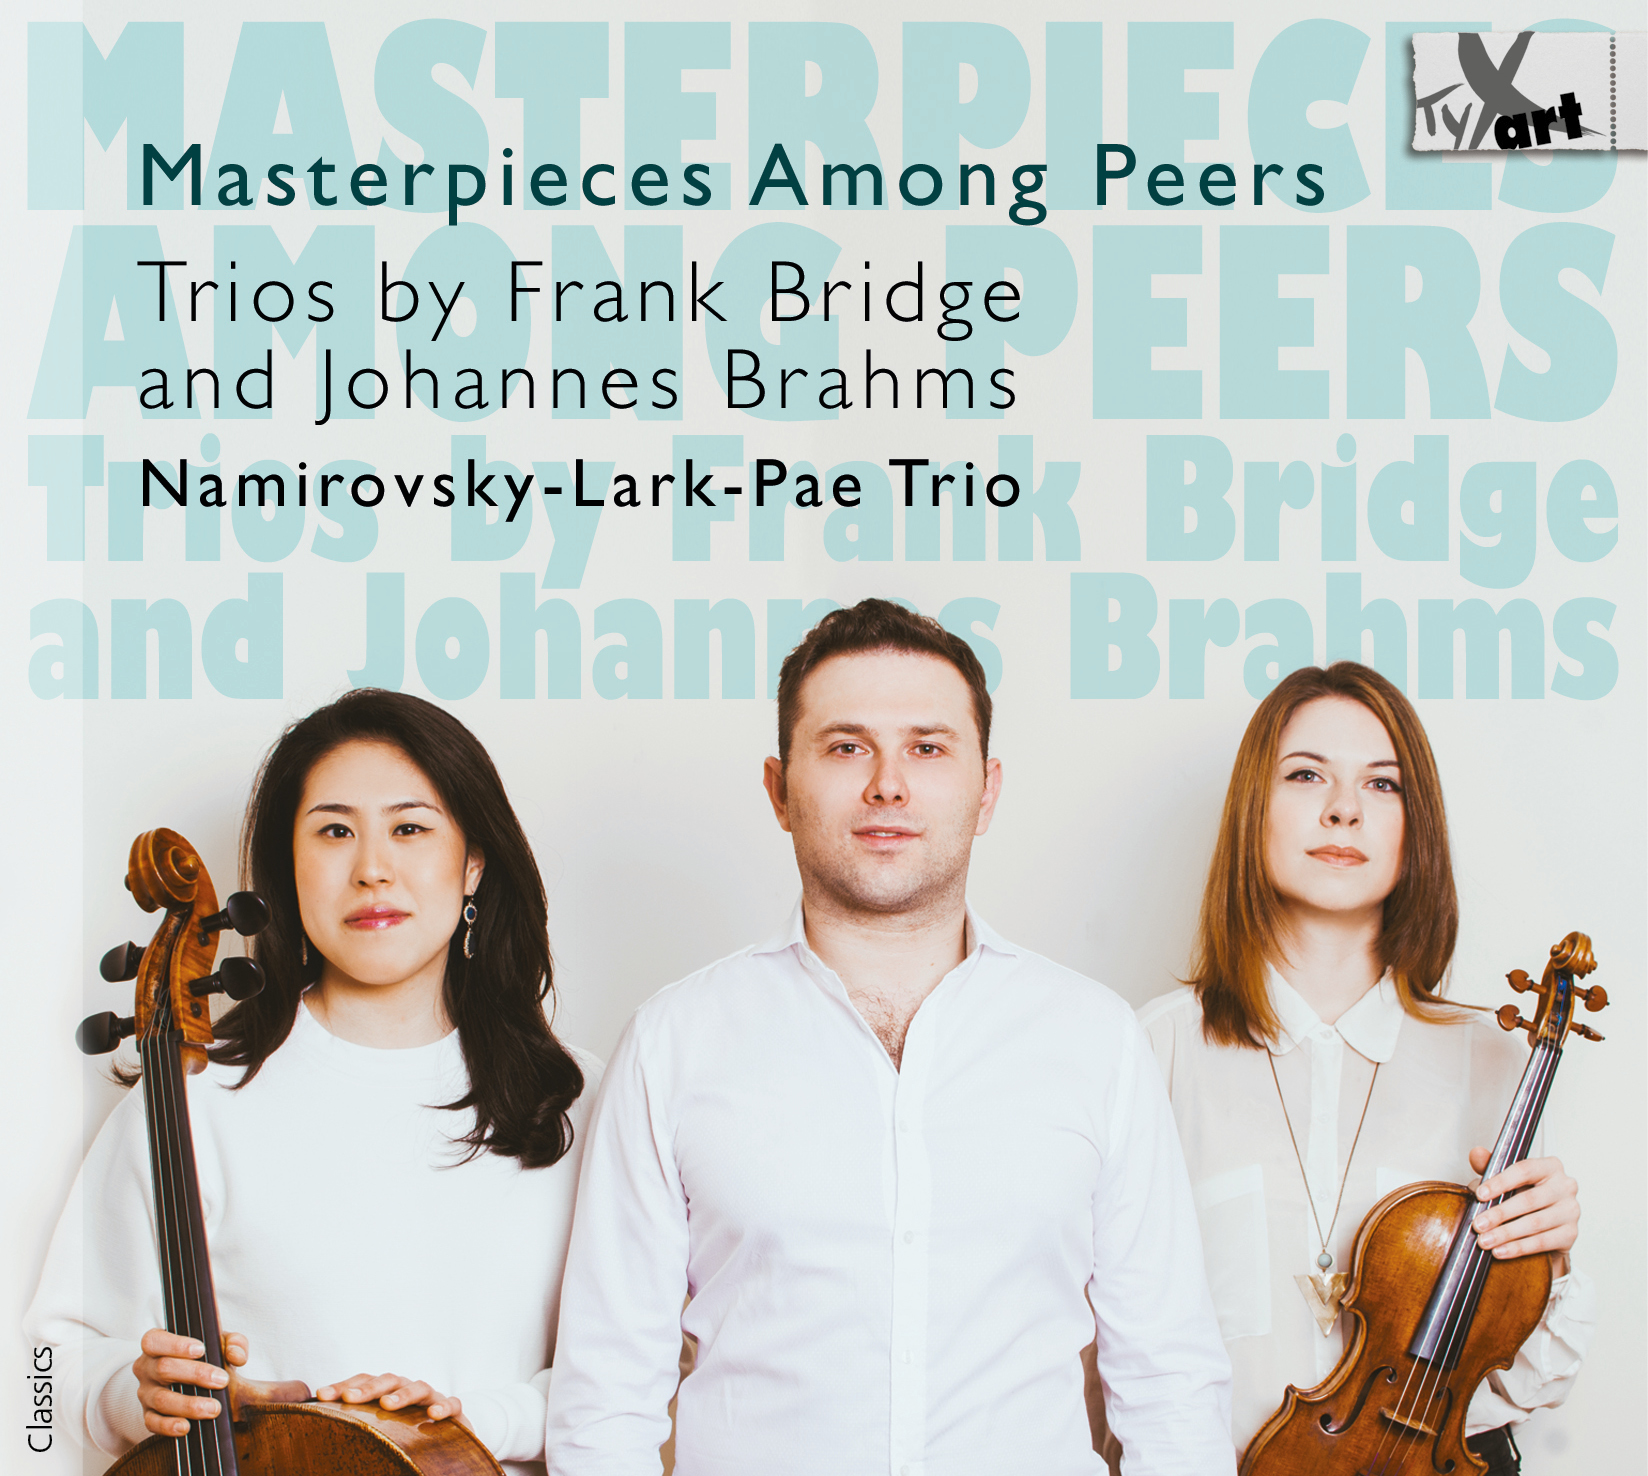 Masterpieces Among Peers: Trios by Frank Bridge and Johannes Brahms - Namirovsky-Lark-Pae Trio